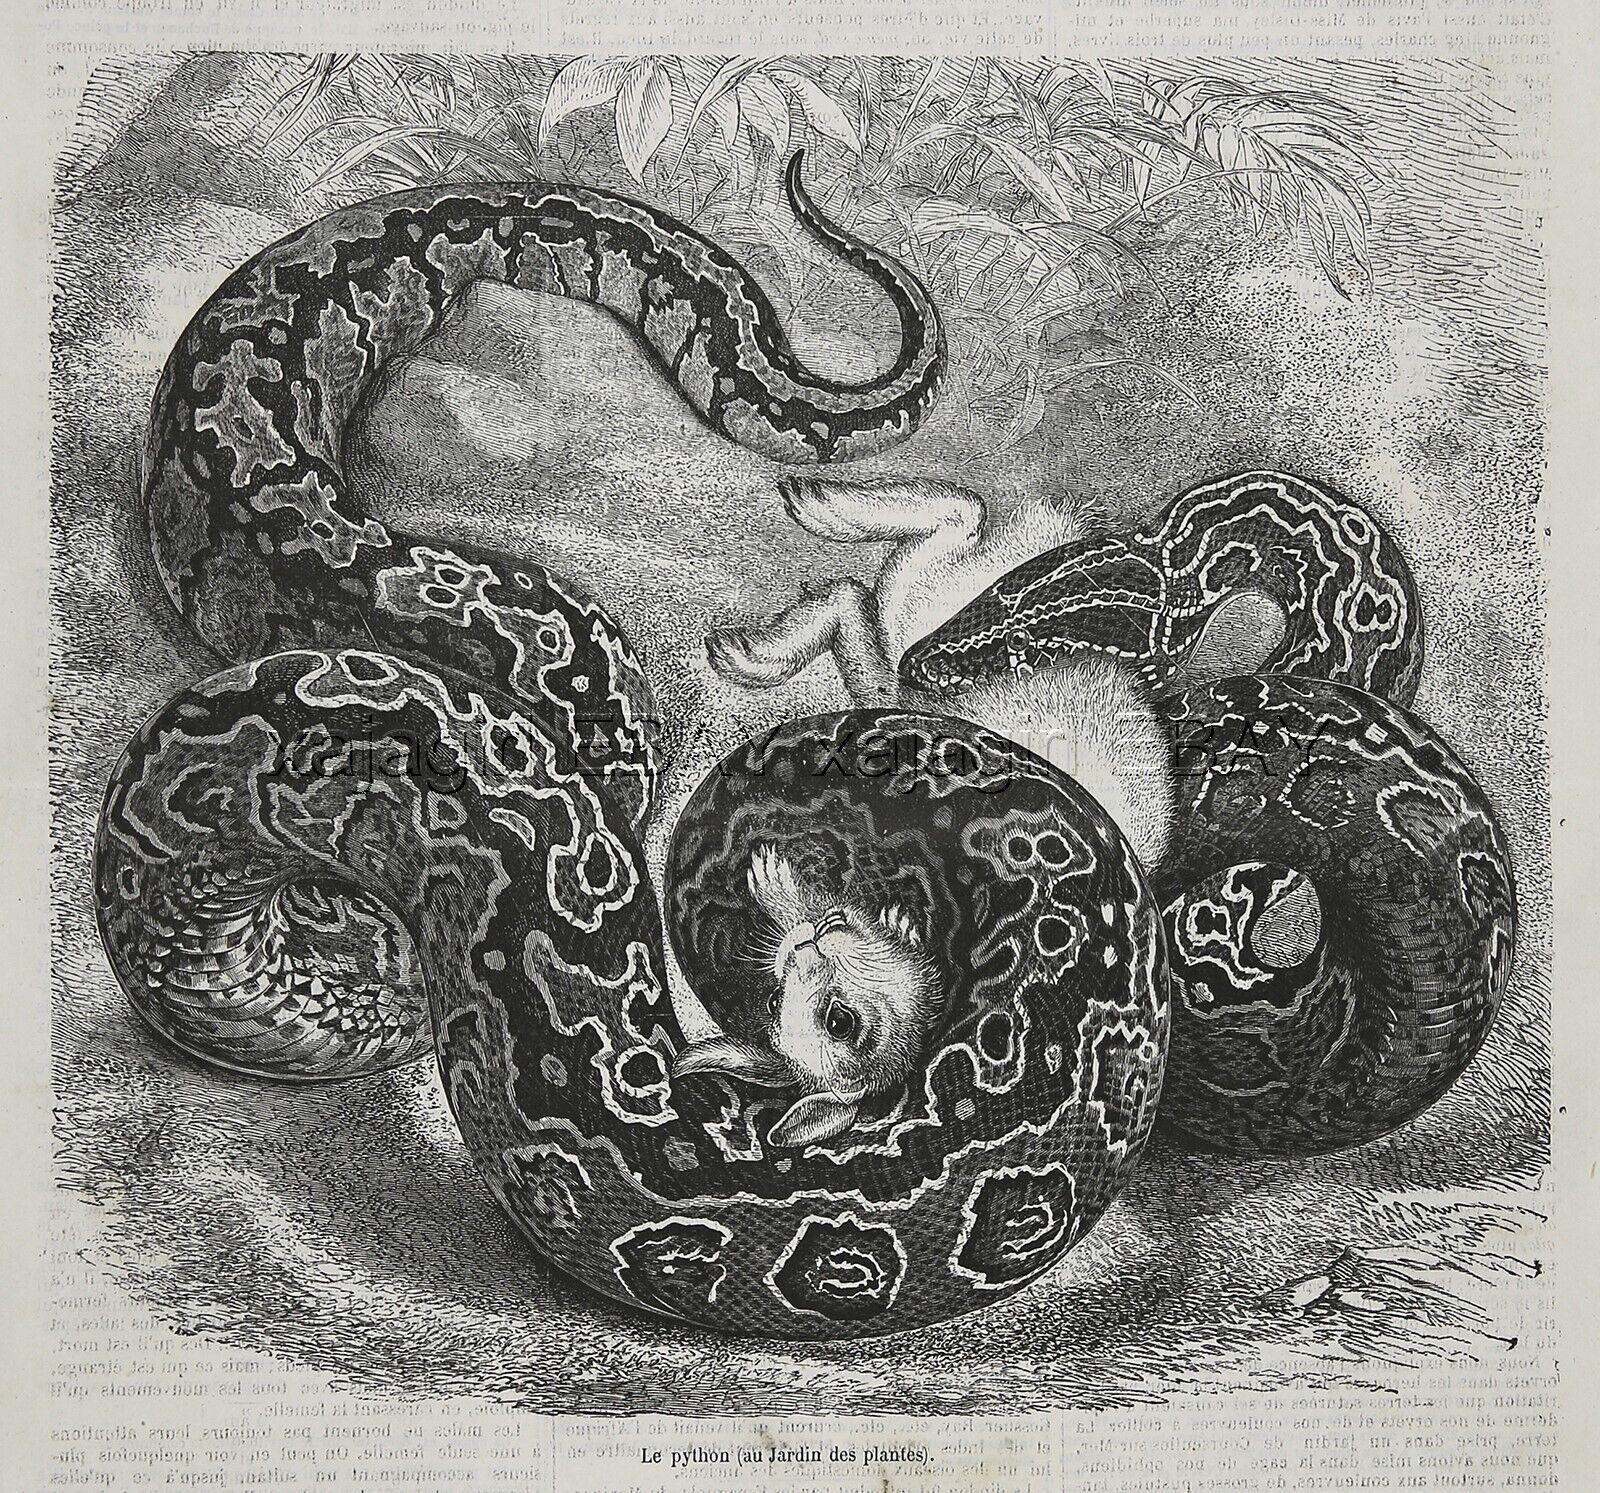 Snake Python Vs Rabbit at Zoo Paris France, Large 1870s Antique Engraving Print